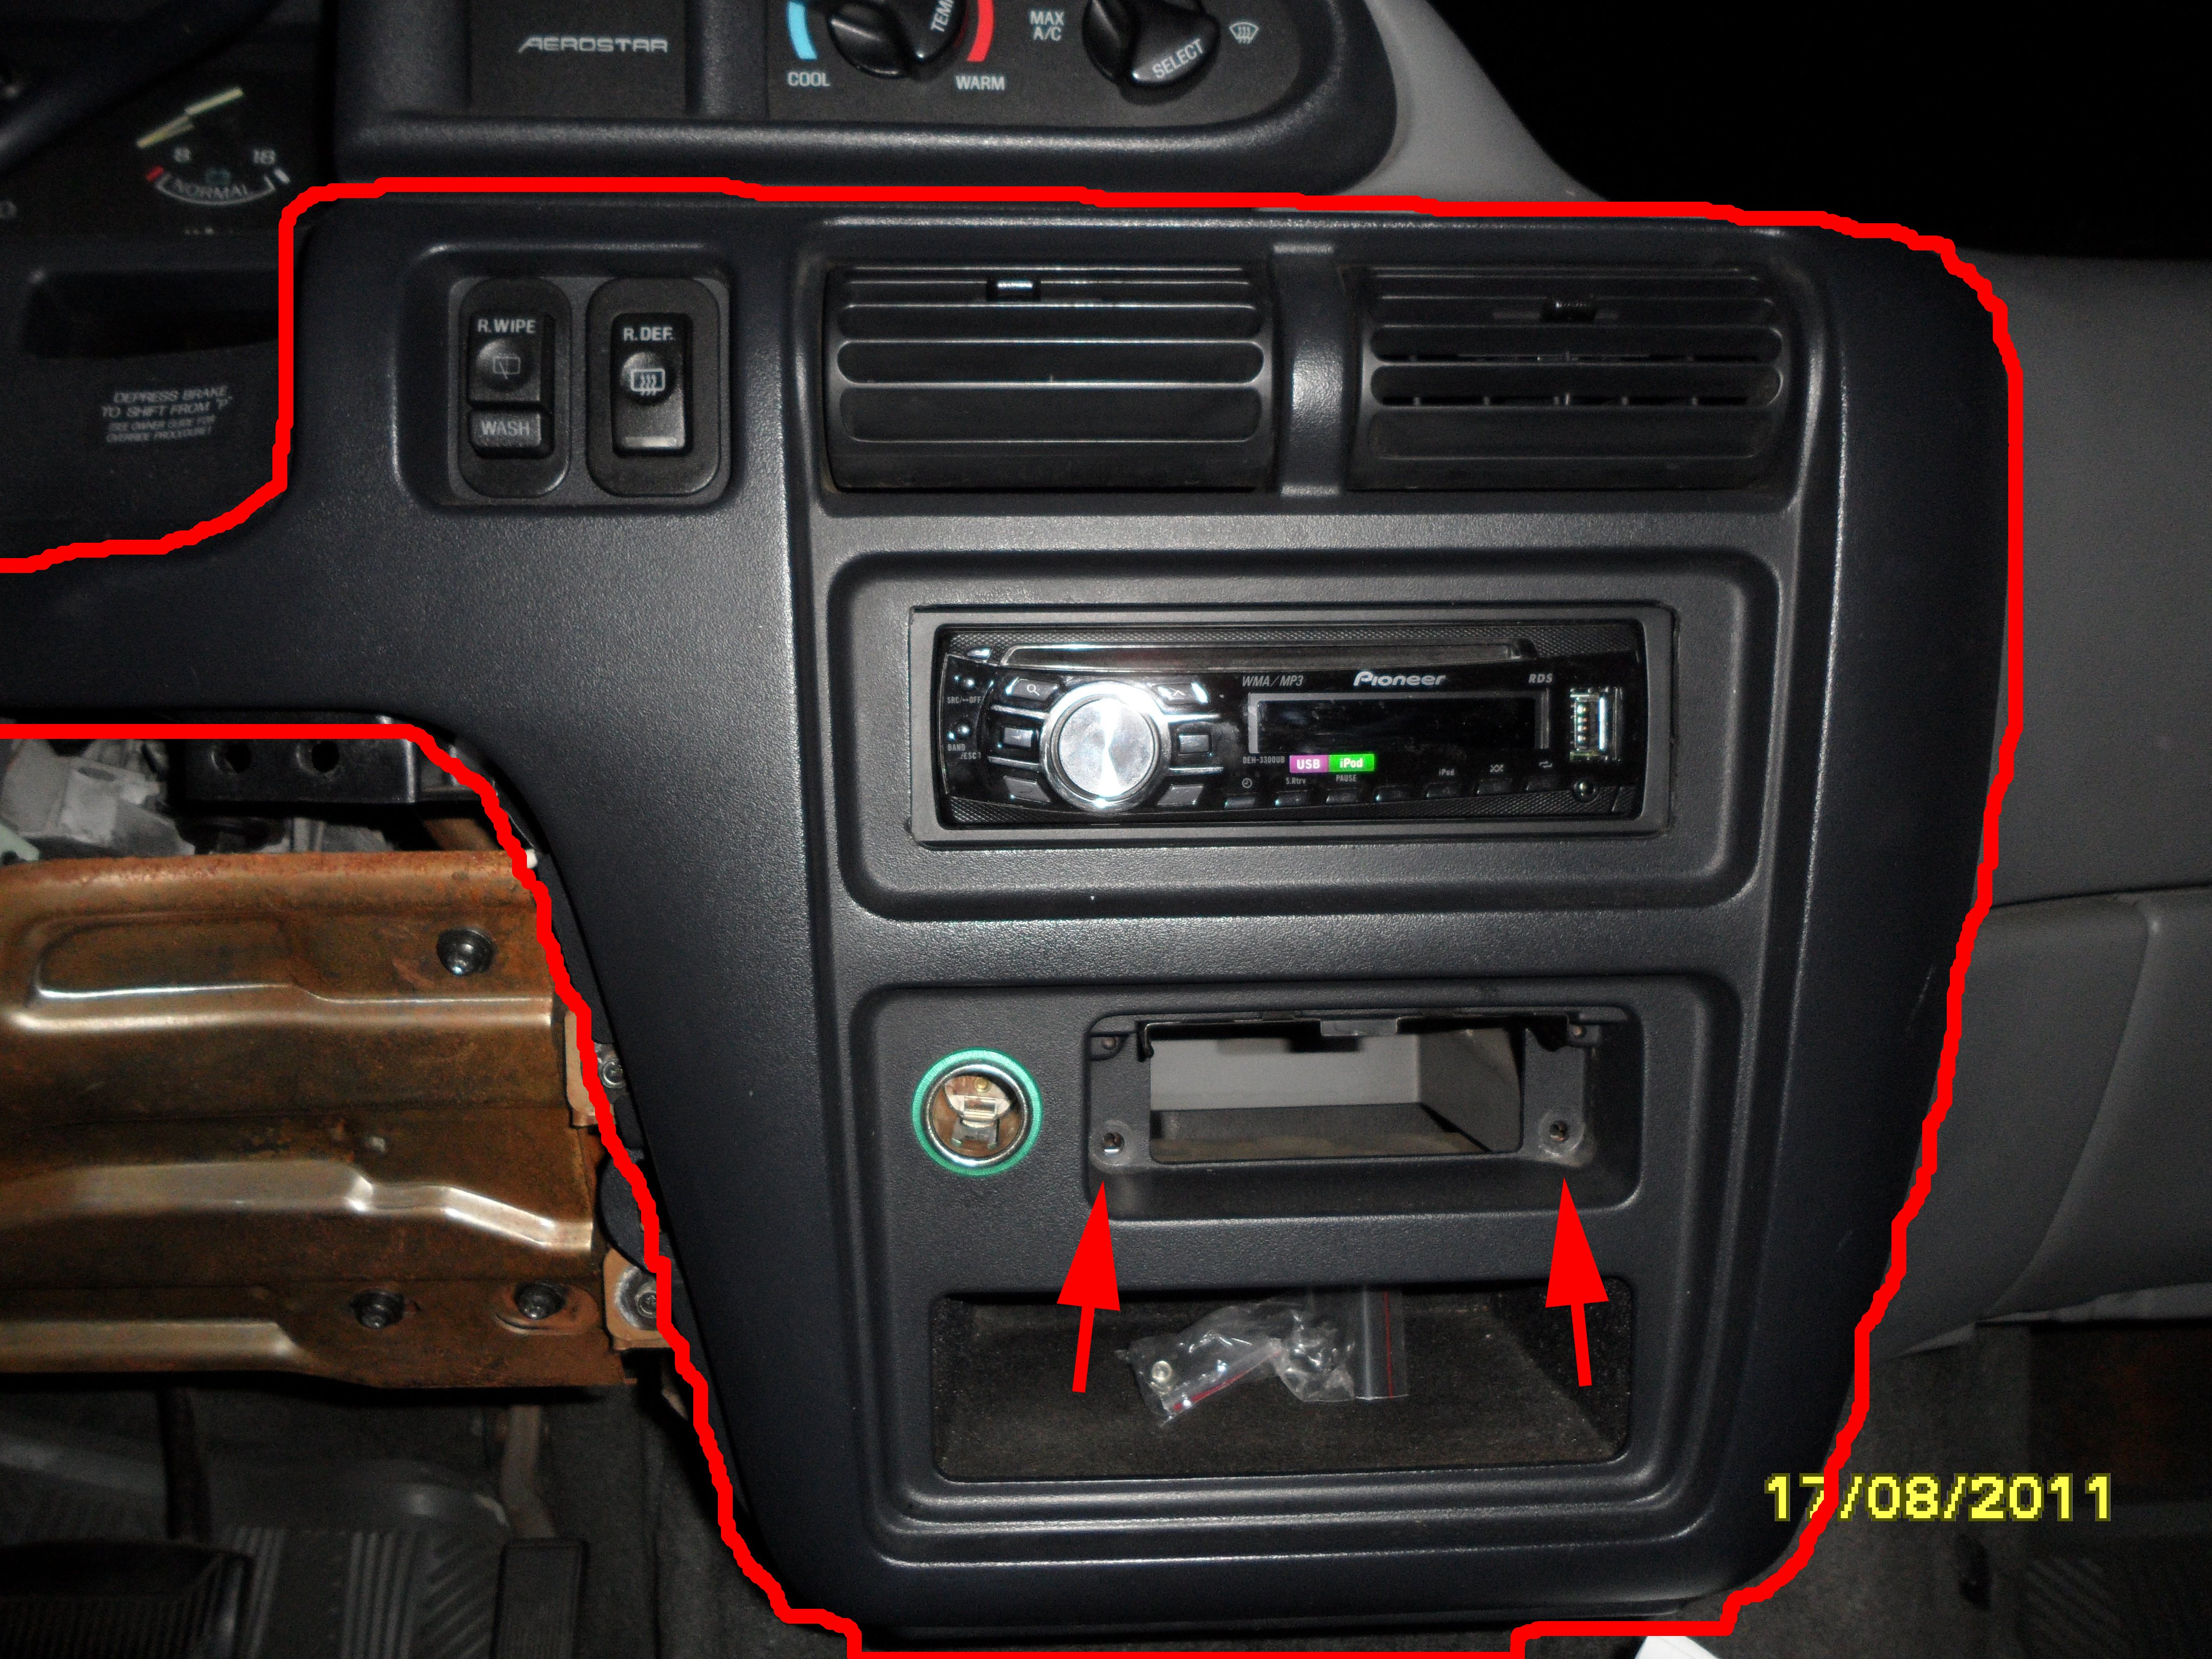 93 Ford aerostar stereo wiring #4